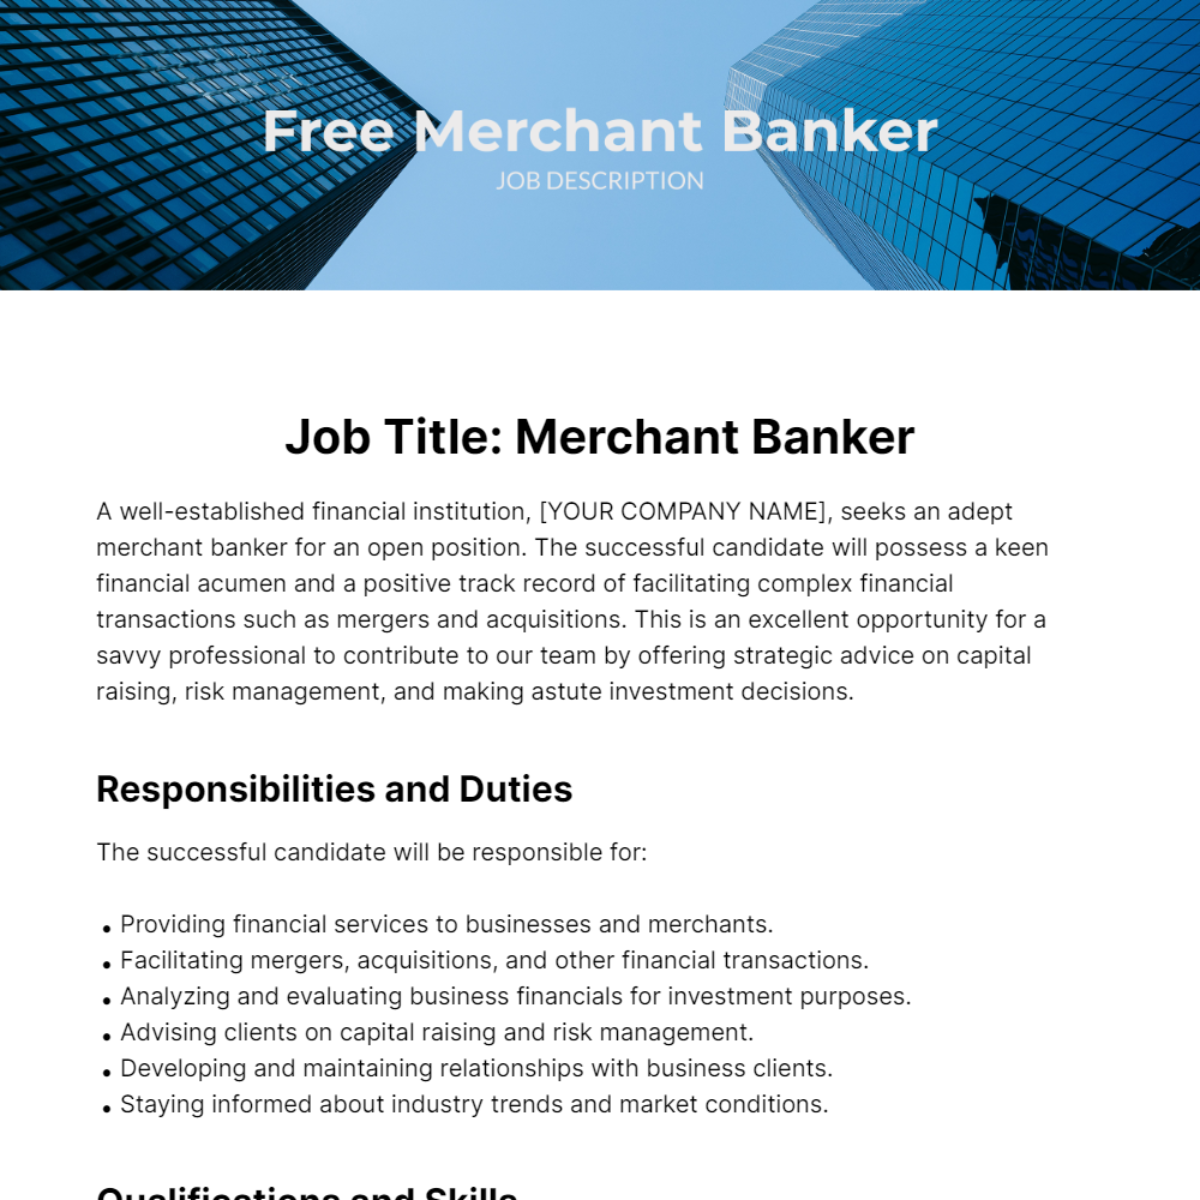 Free Merchant Banker Job Description Template